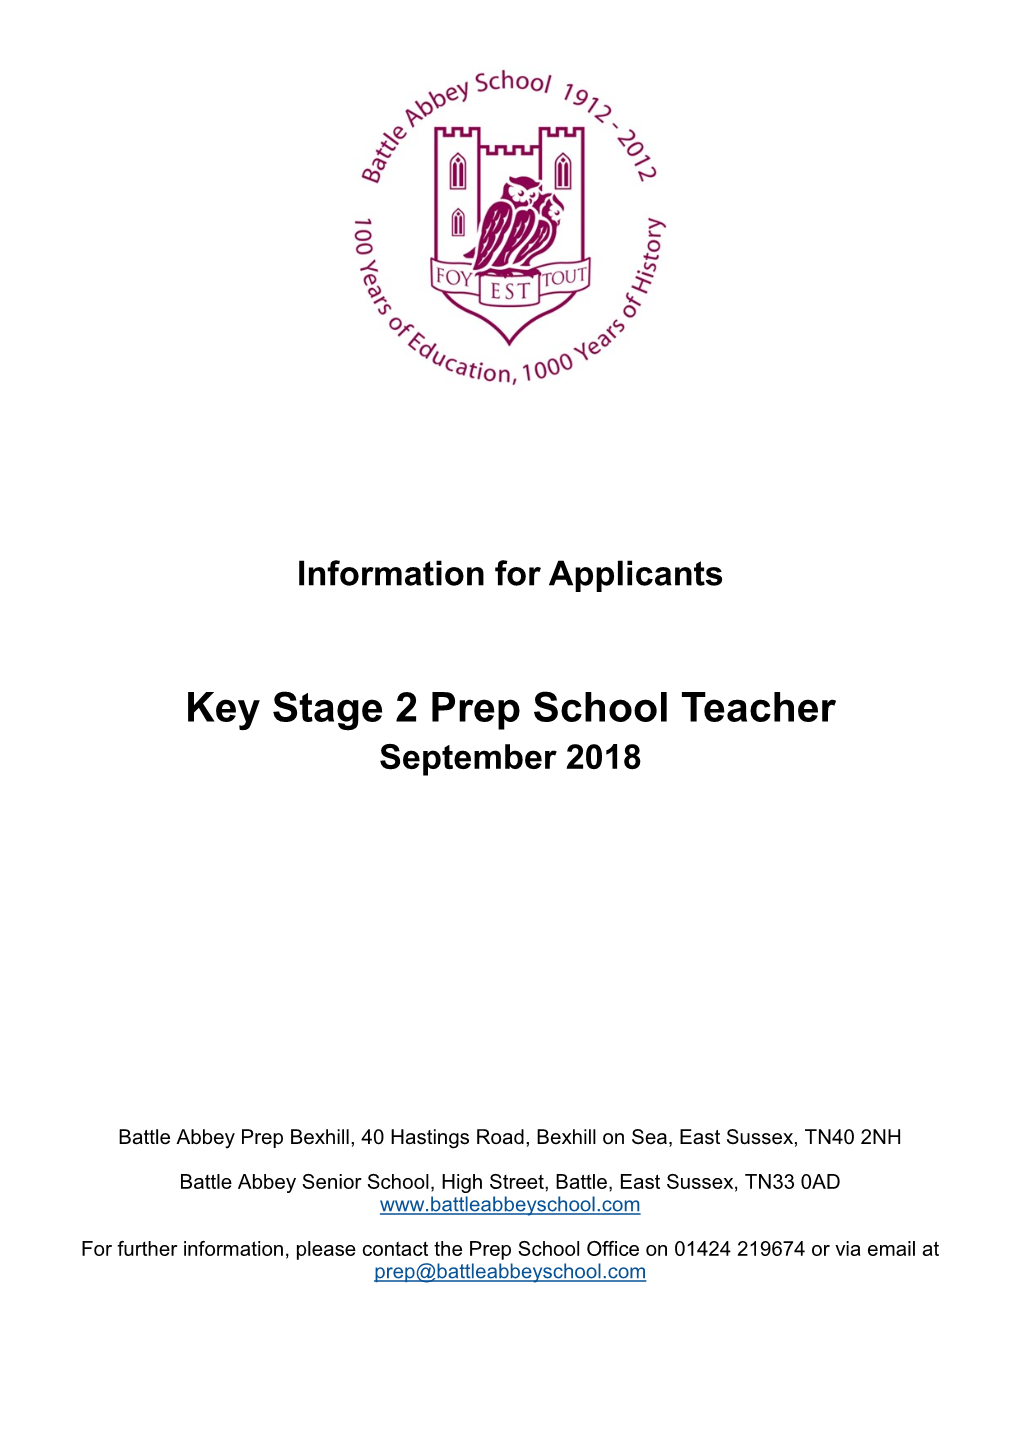 Key Stage 2 Prep School Teacher September 2018